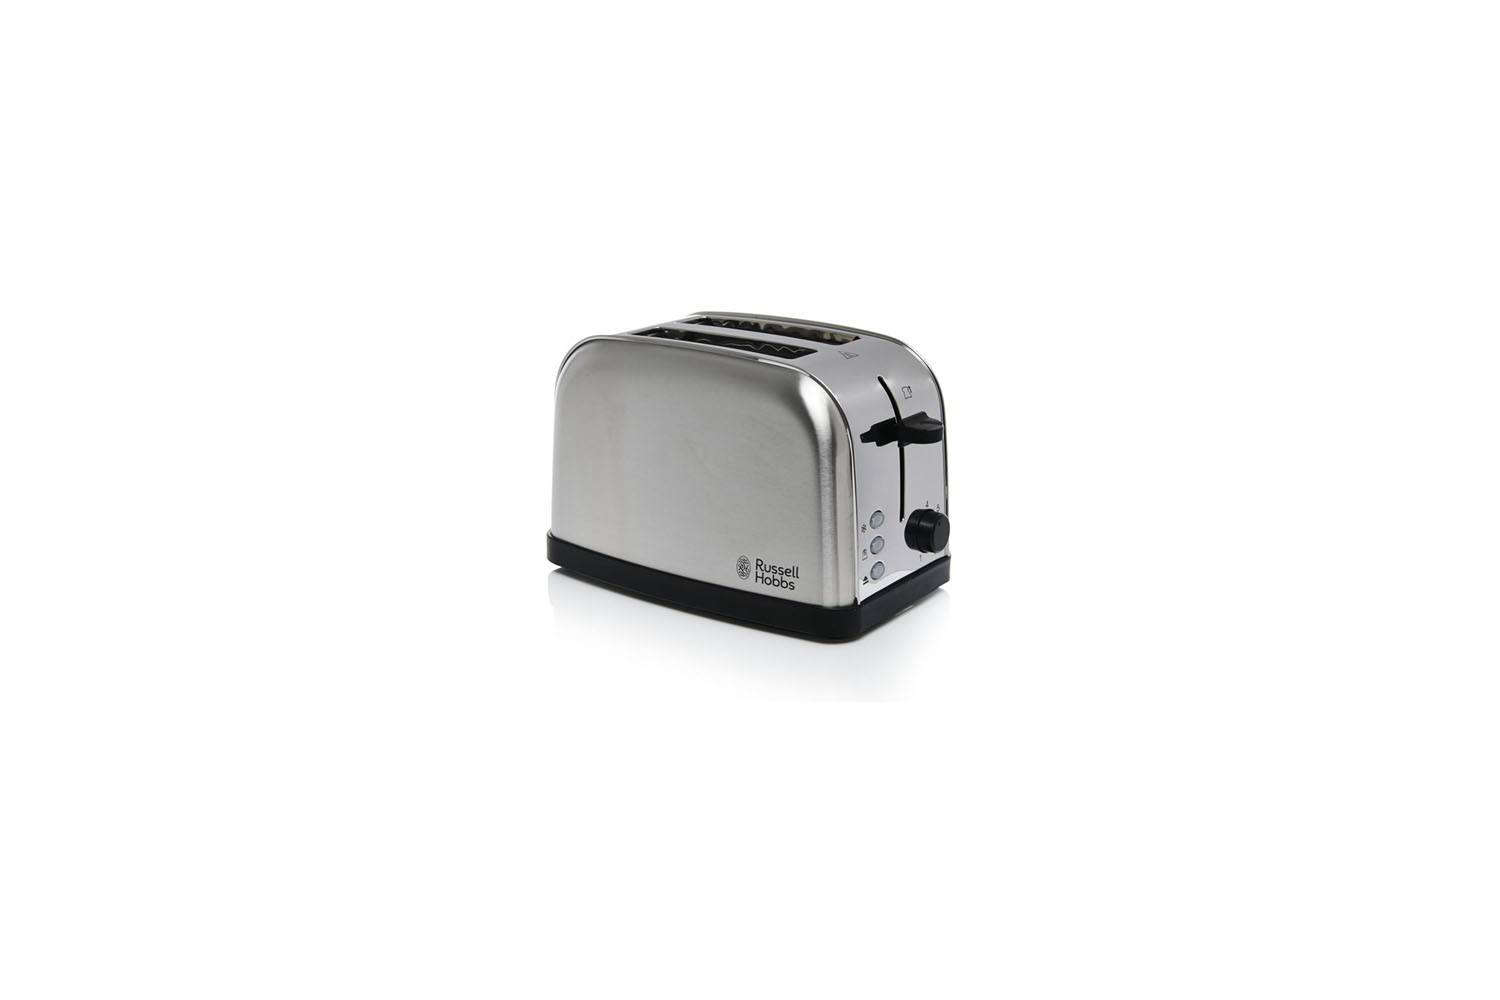 https://www.remodelista.com/wp-content/uploads/2018/01/russell-hobbs-2-slice-toaster-stainless-steel.jpg